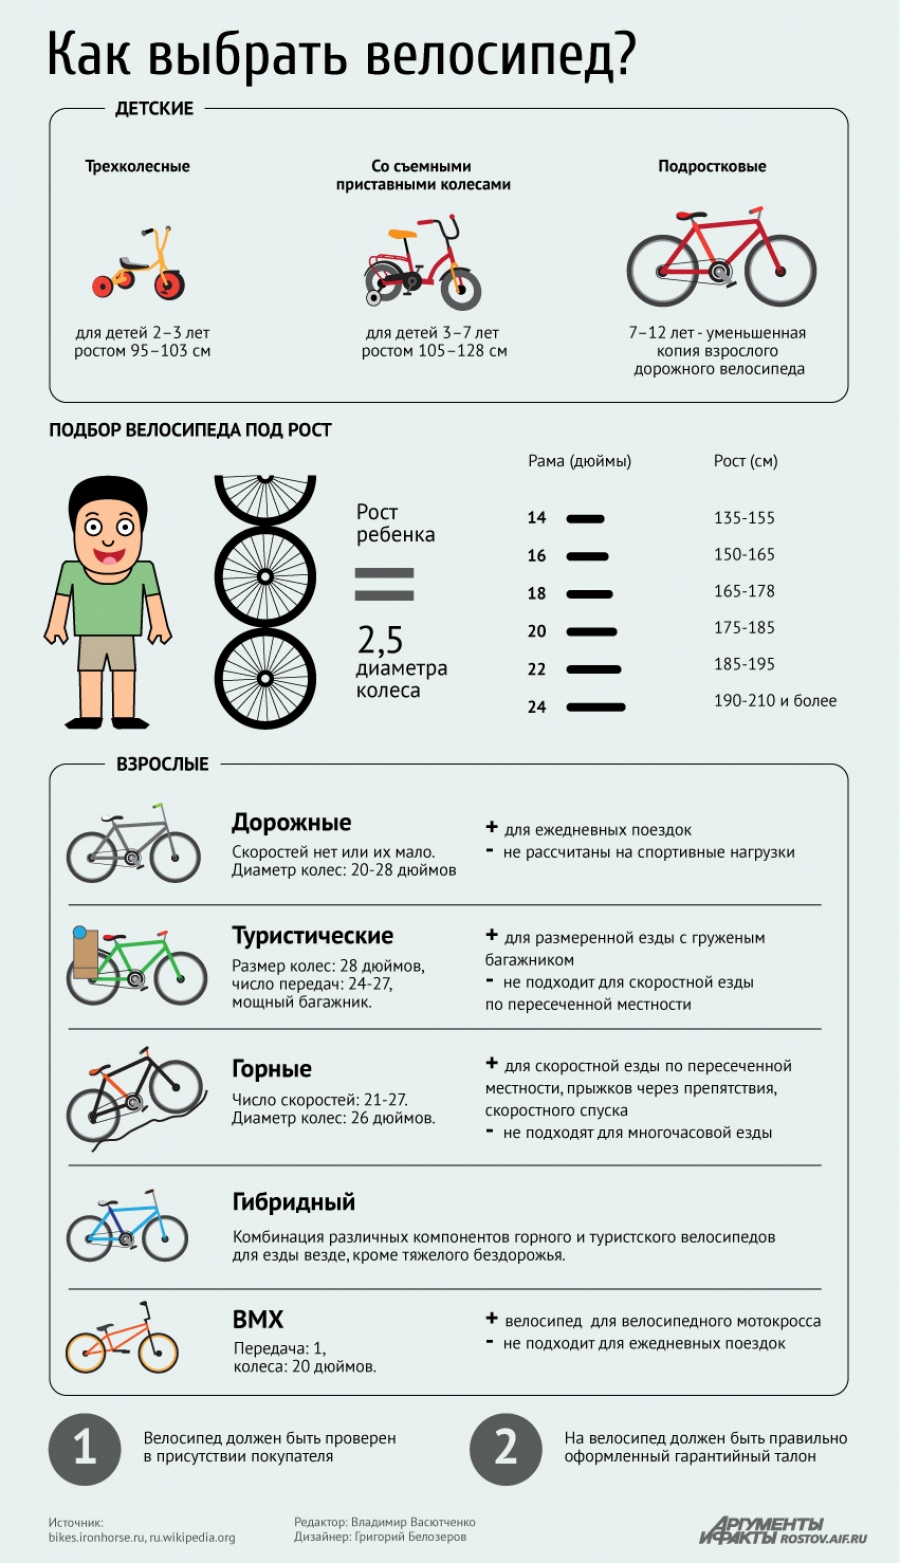 Колеса 24 на какой возраст. Размер рамы велосипеда для ребенка 7 лет. Размер колёс велосипеда по возрасту ребенка таблица. Велосипед на 6 лет диаметр колес. Как выбрать диаметр колеса велосипеда по росту ребенка.